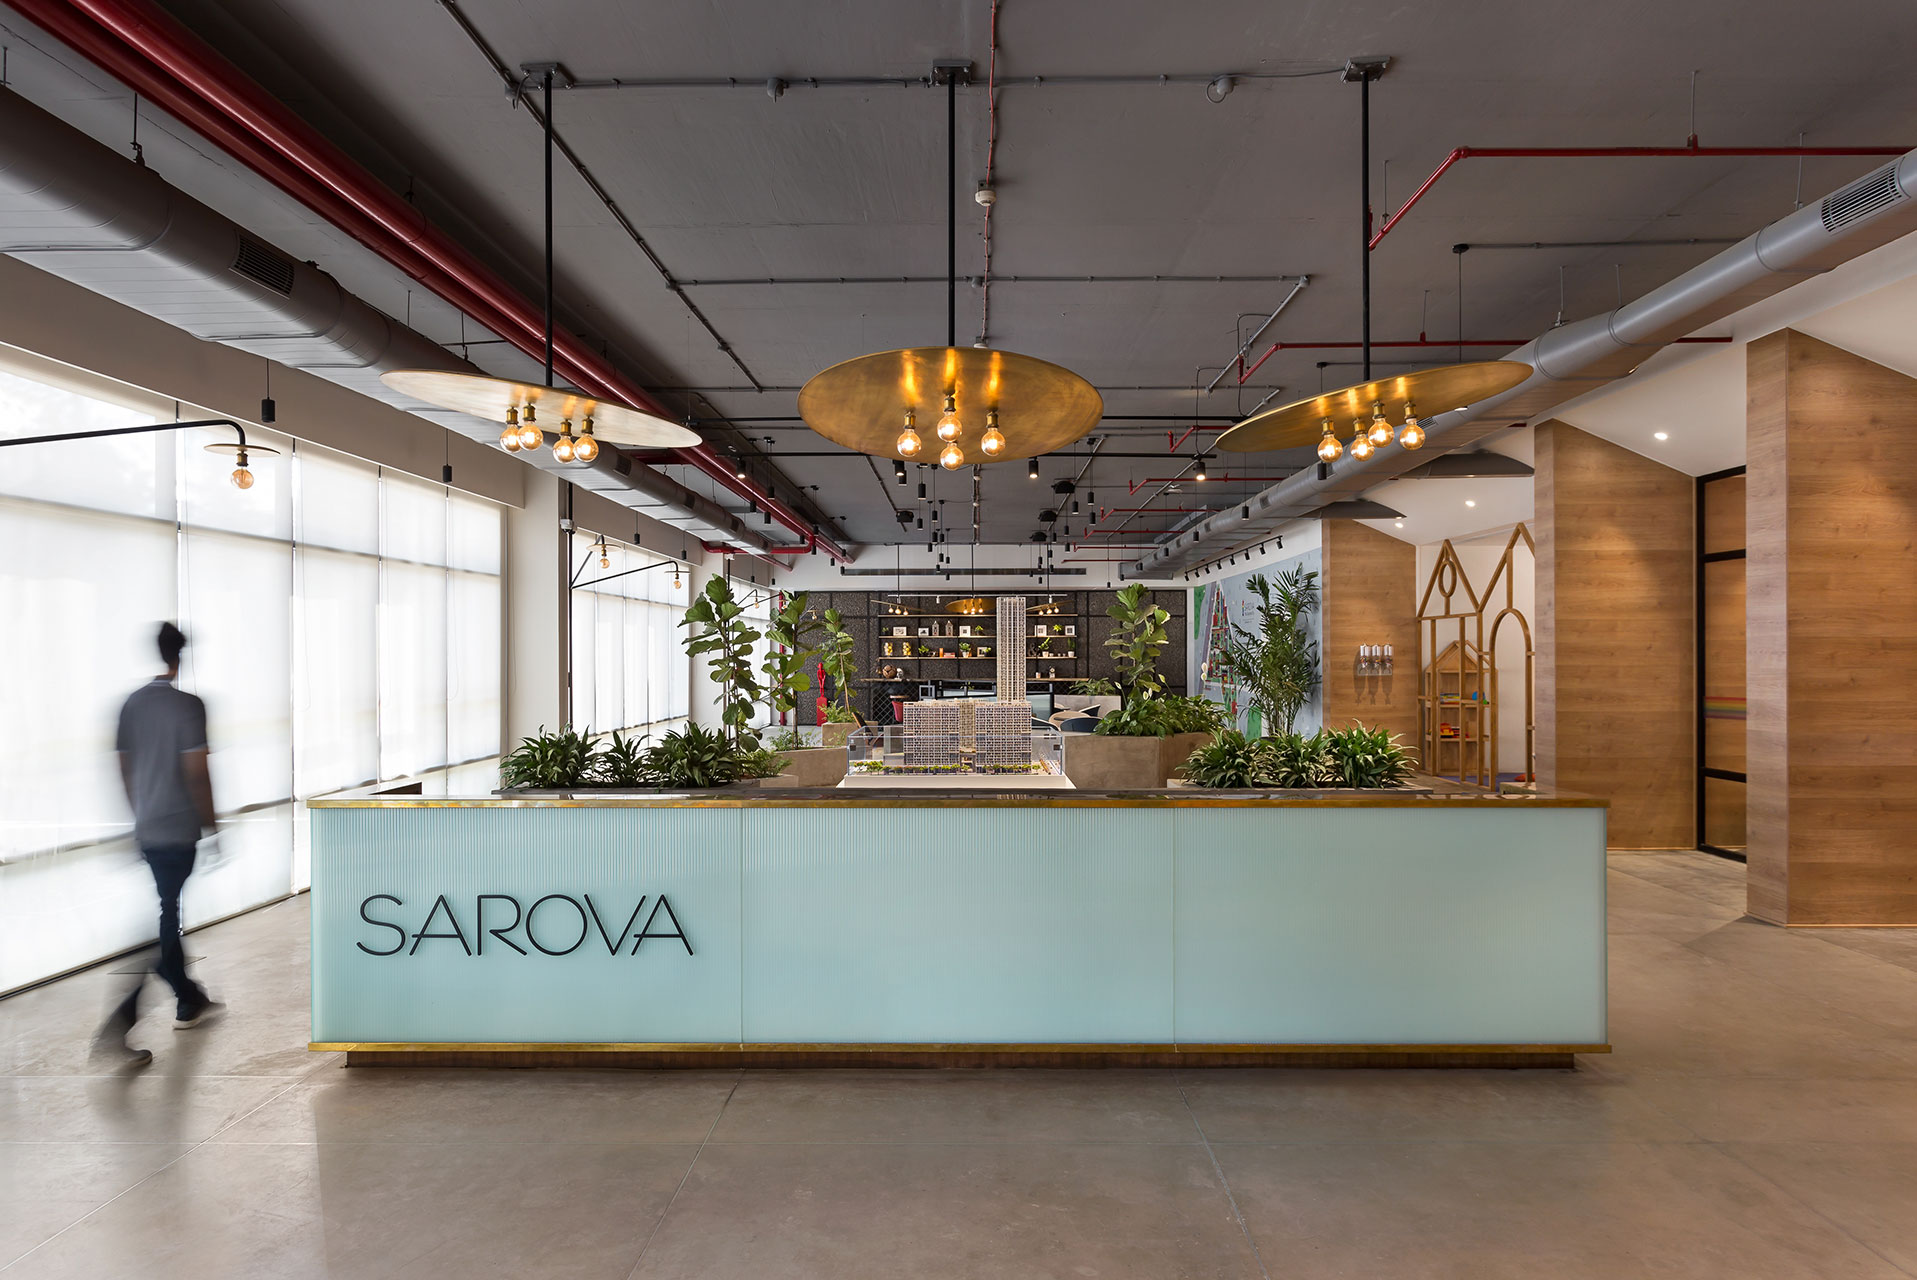 Sarova Experience Center